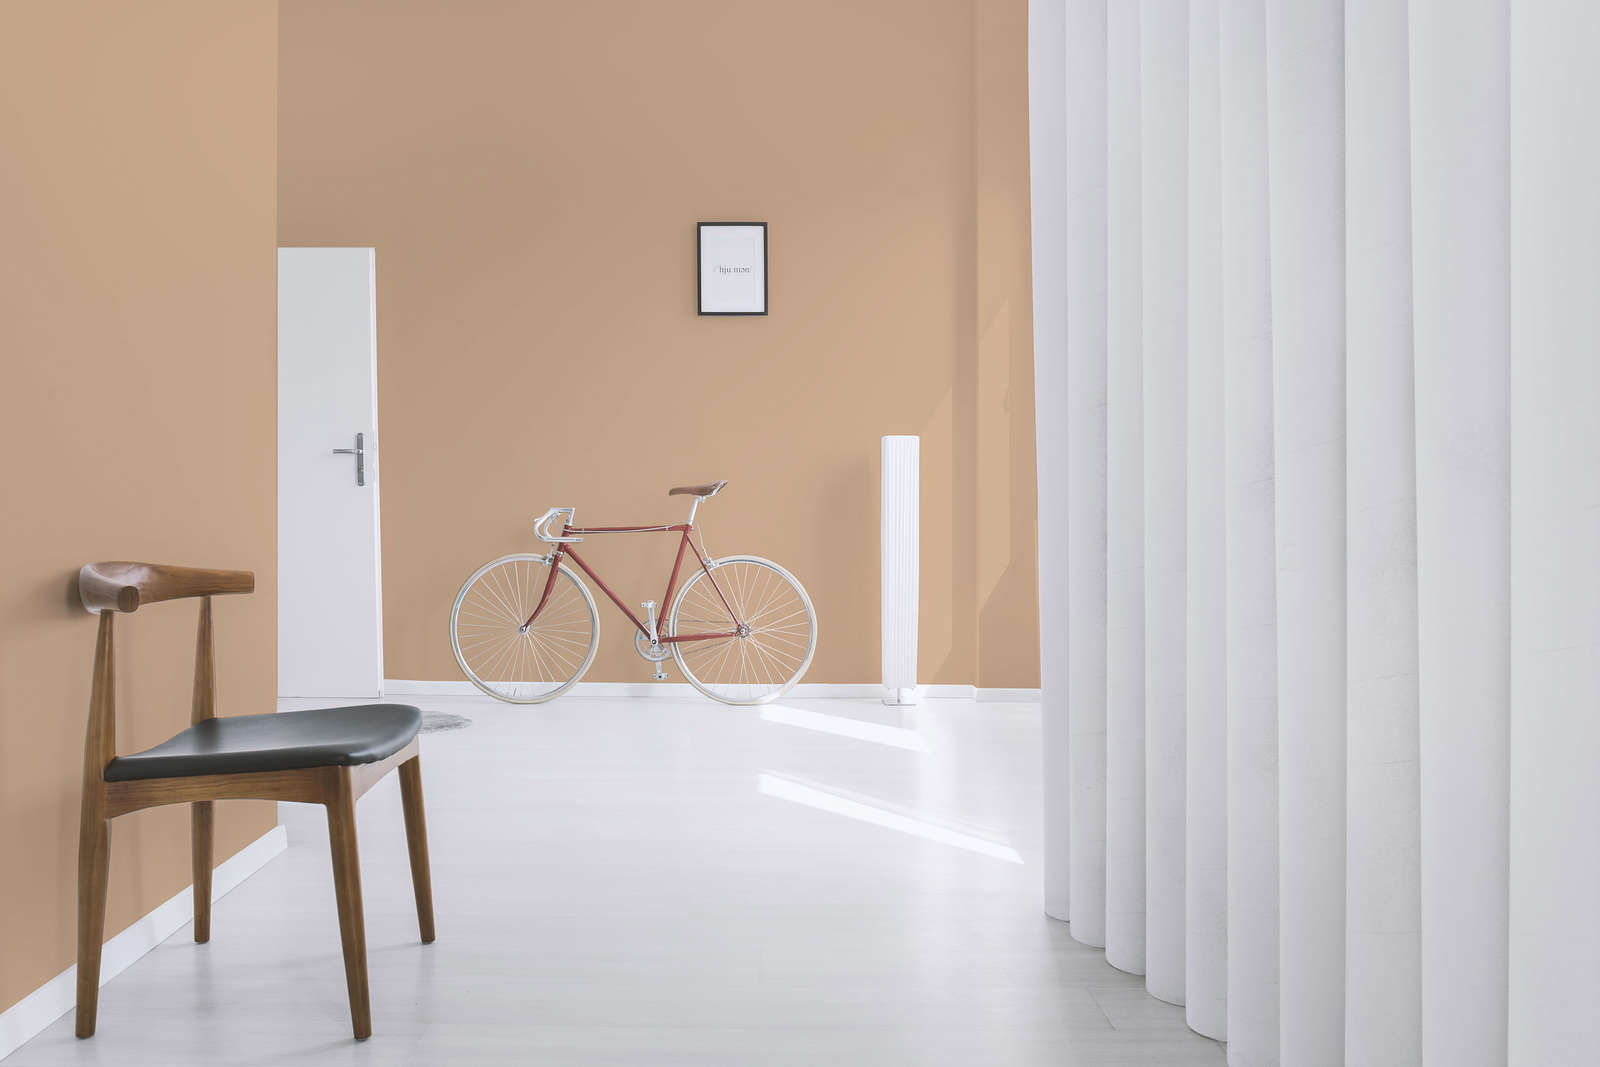             Premium Wall Paint cheerful light beige »Boho Beige« NW727 – 5 litre
        